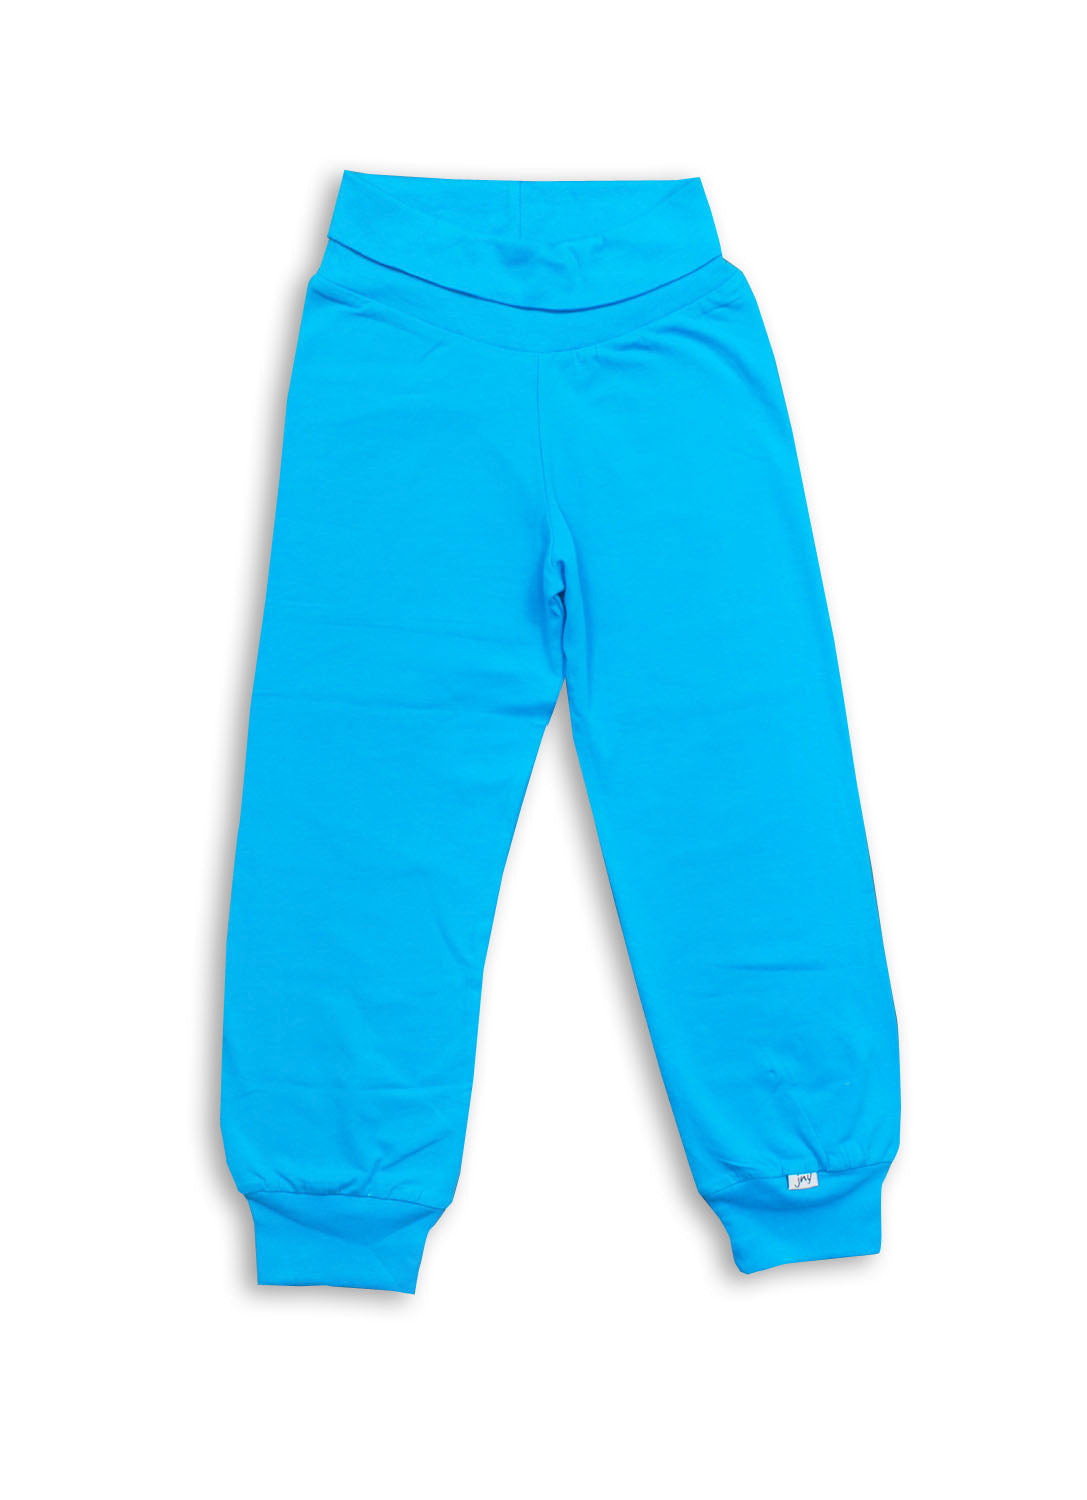 PRICE DROP * JNY - Basics - Comfy Pants - Turquoise (new style)